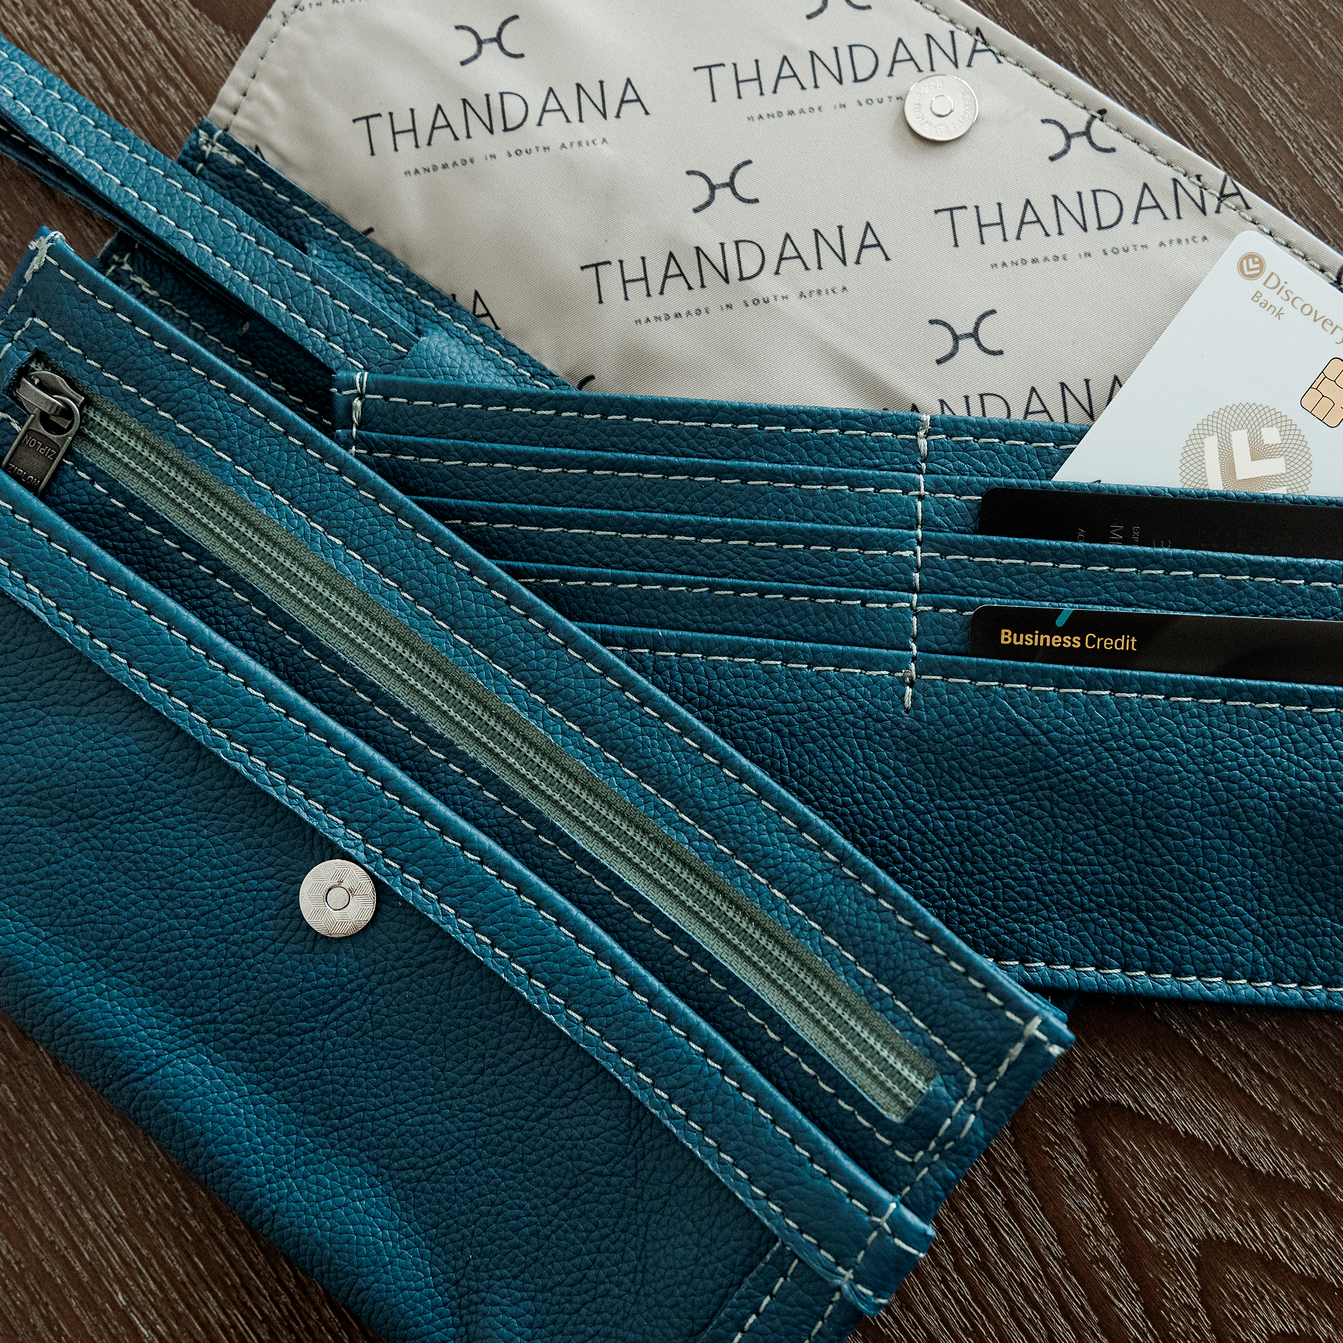 Thandana Leather Travel Wallet - KaryKase